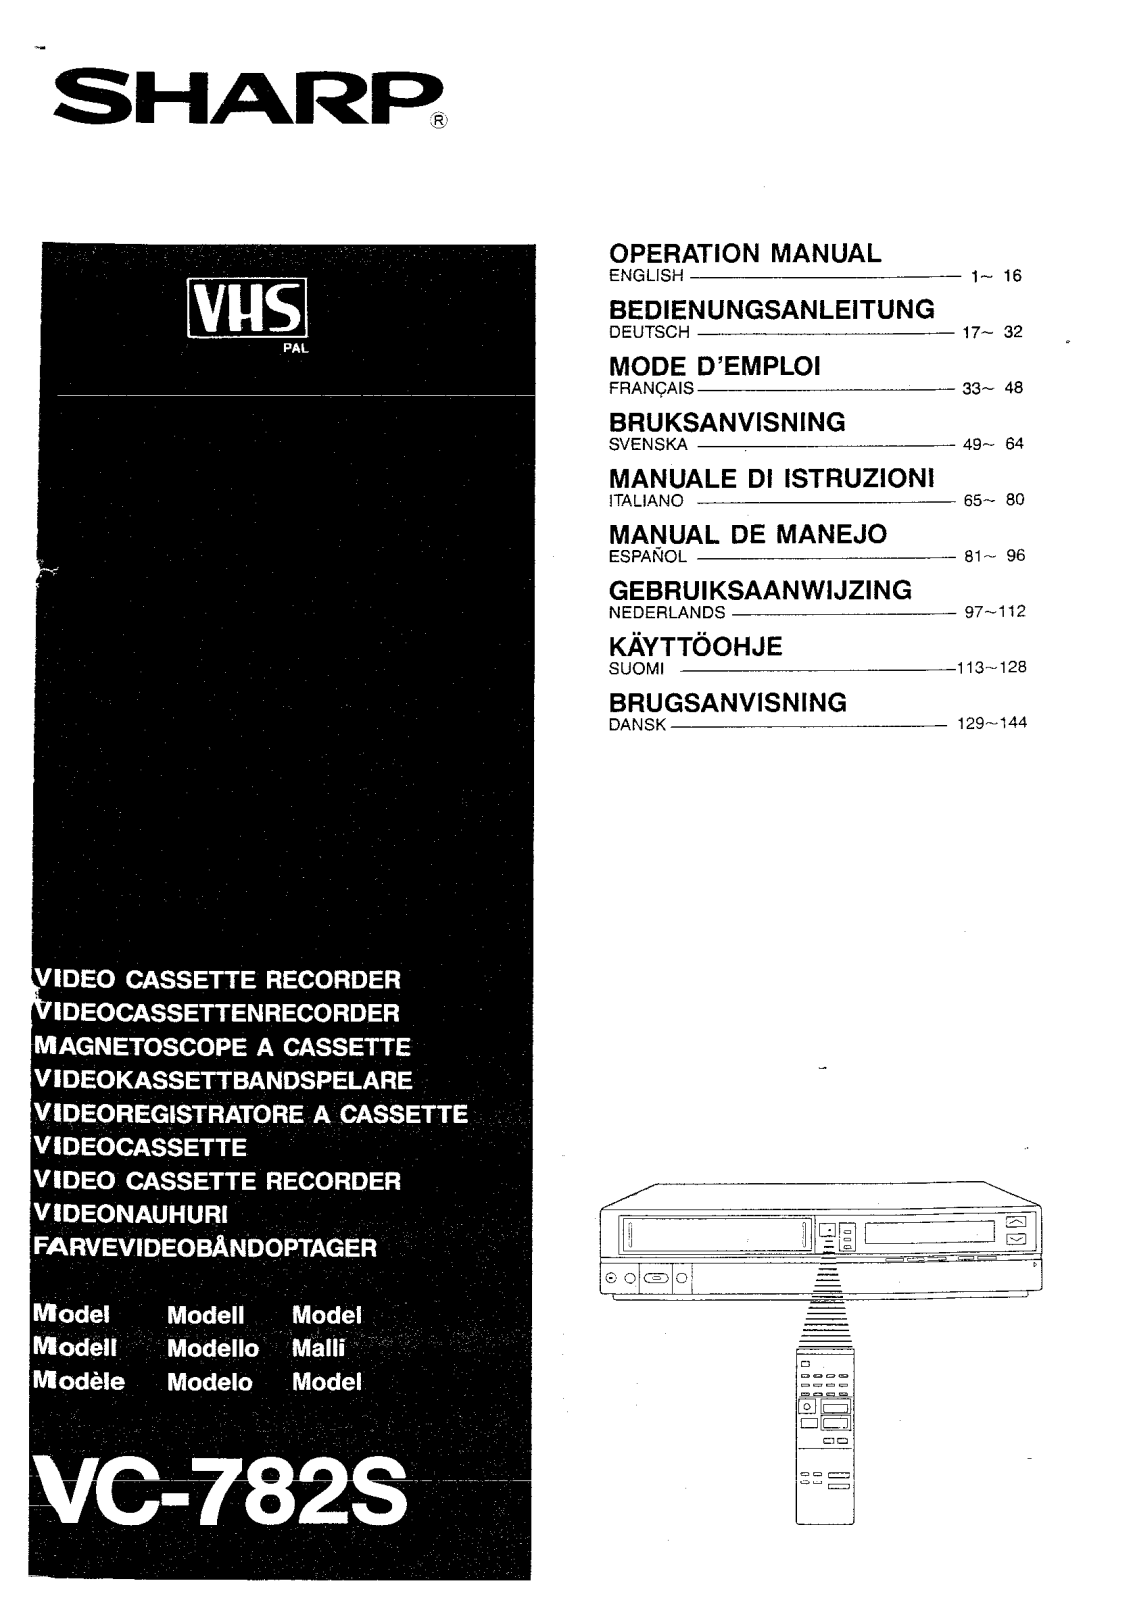 Sharp VC-782S Manual